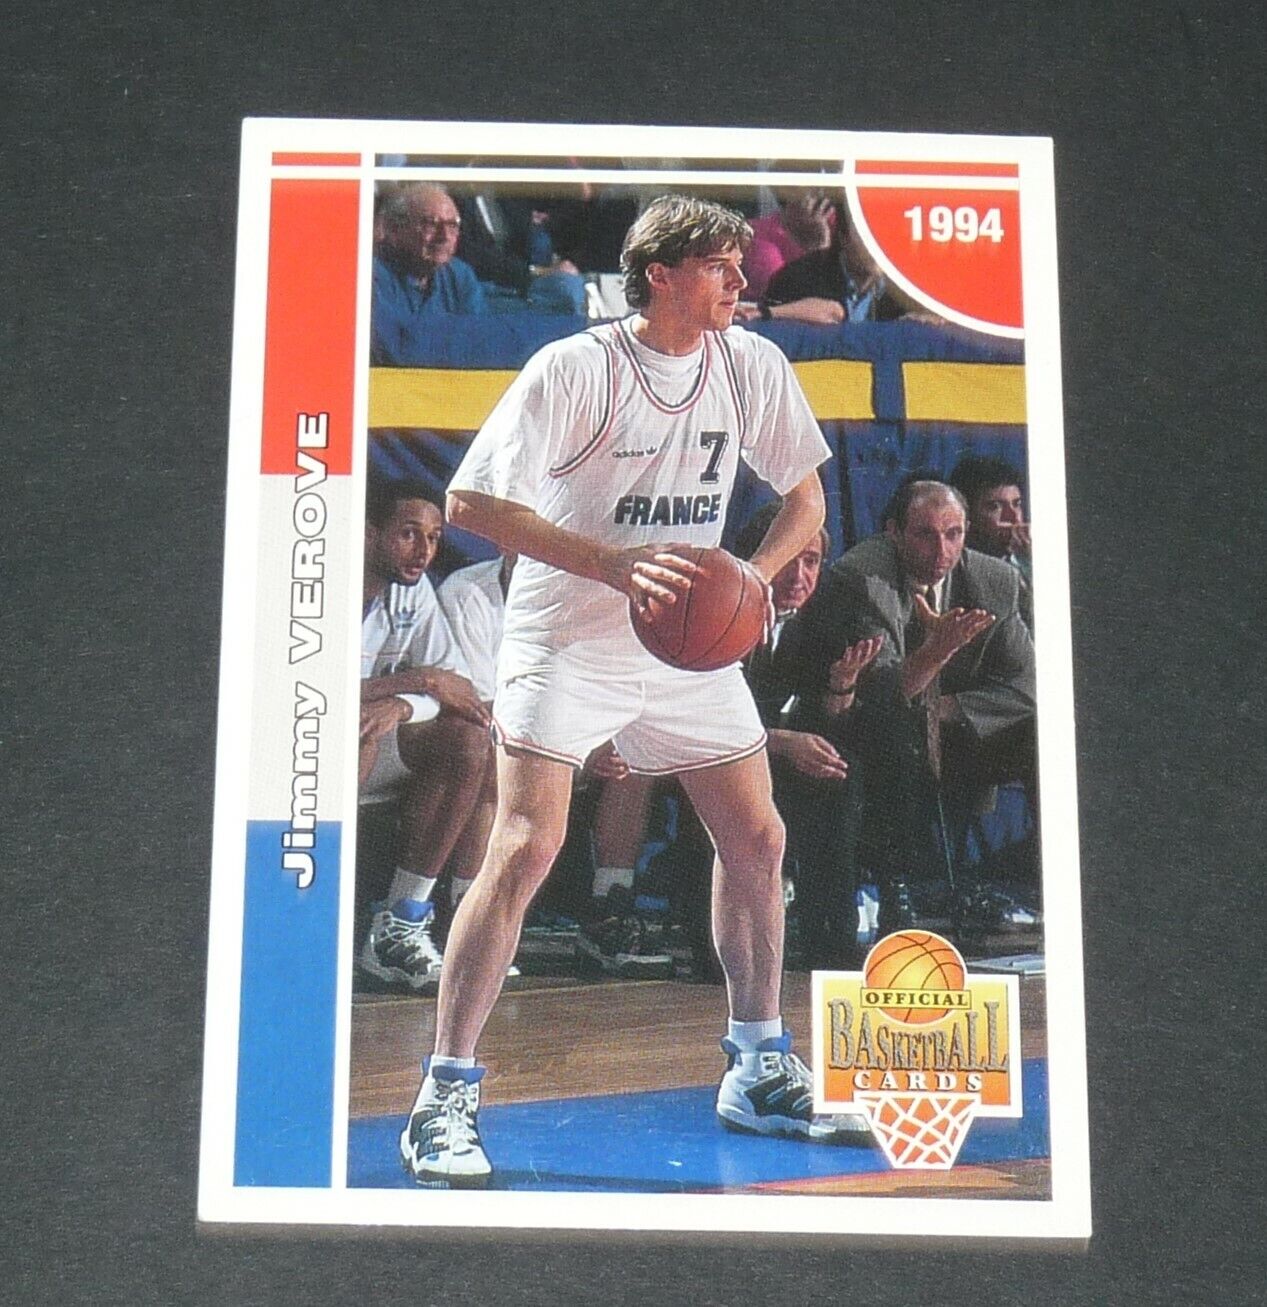 JIMMY VEROVE TEAM FRANCE BASKETBALL CSP LIMOGES 1994 BASKETBALL FRANCE PANINI CARD